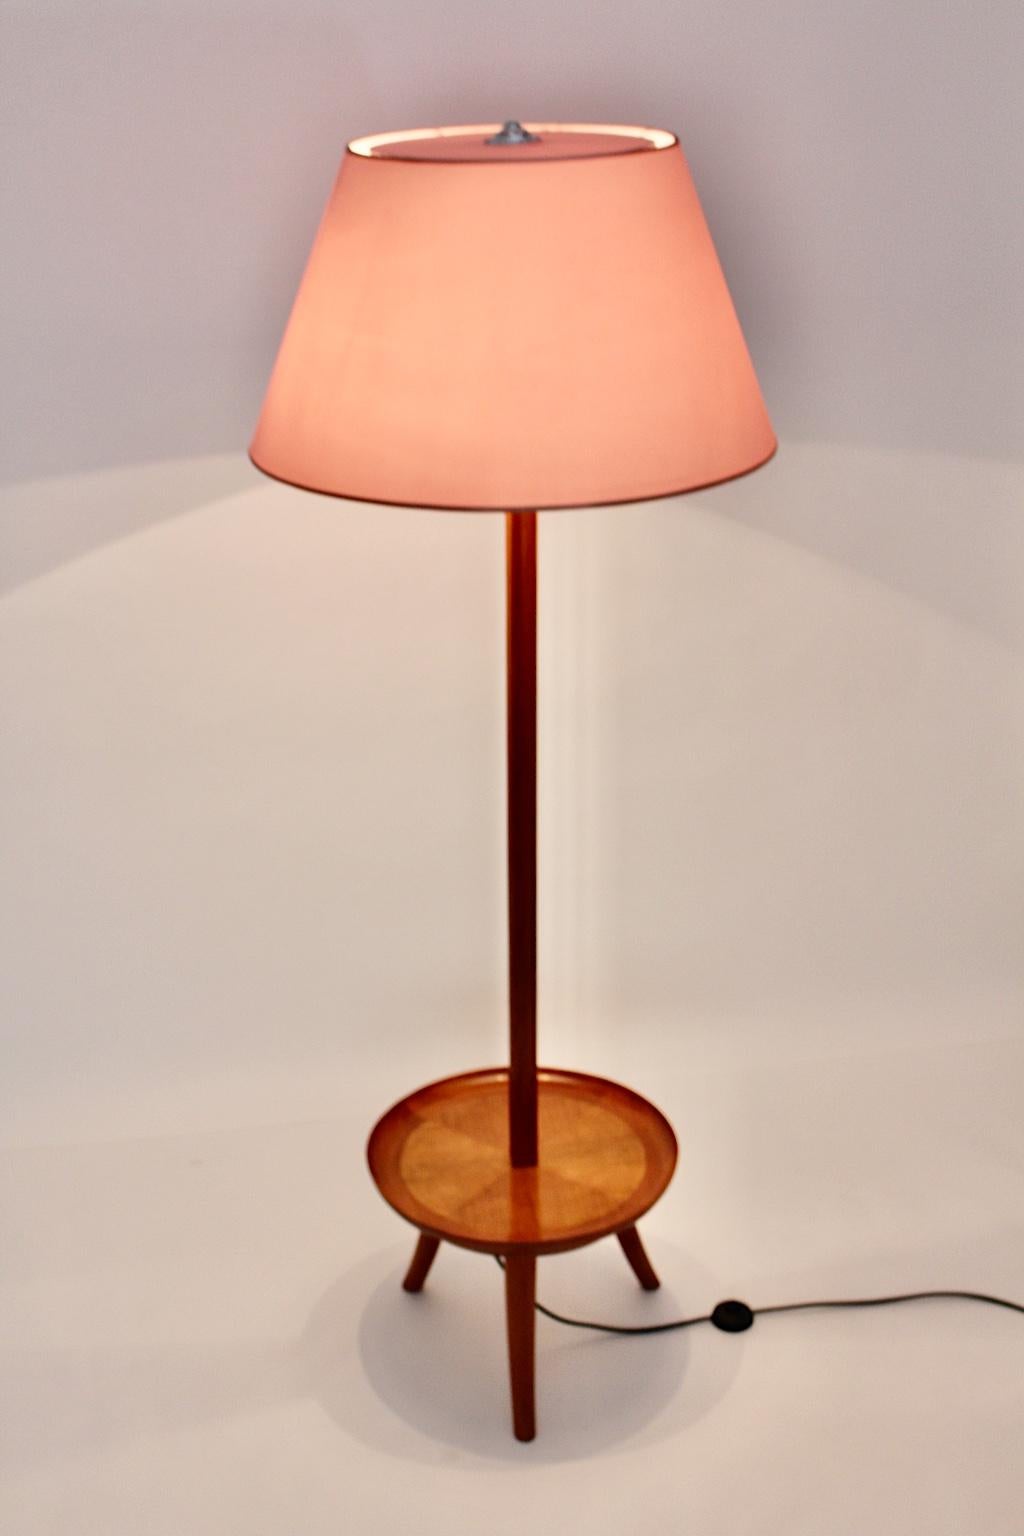 Austrian Art Deco Vintage Cherrywood Pink Floor Lamp Josef Frank Style, 1930s, Vienna For Sale